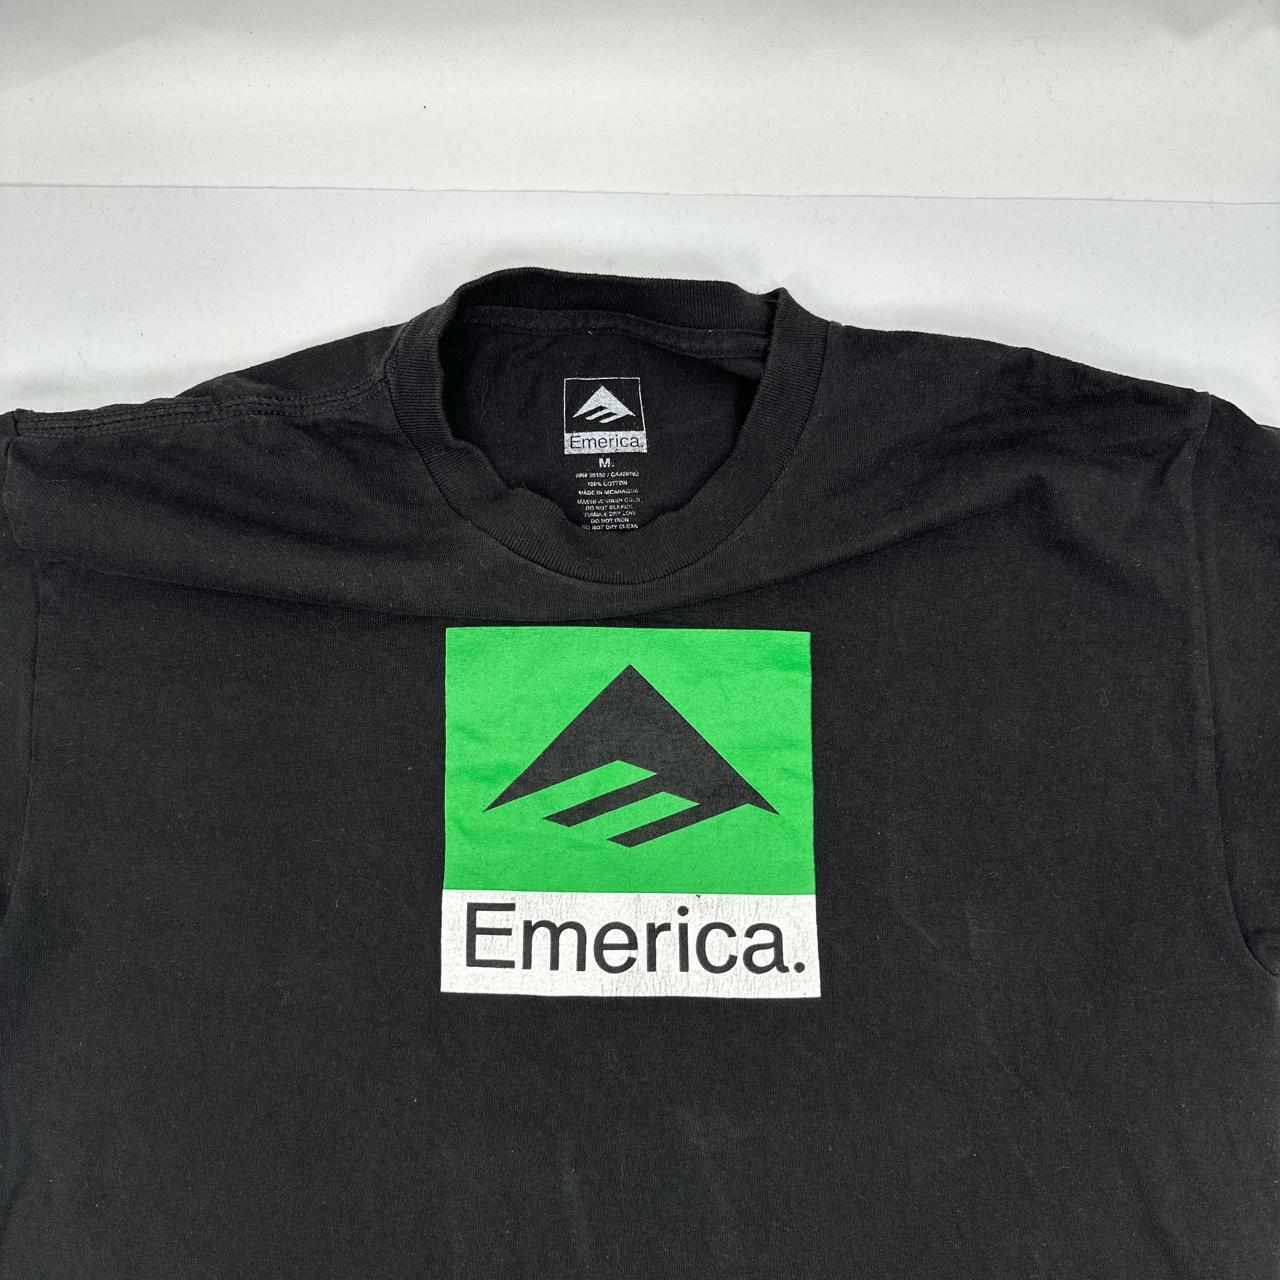 Emerica Men's Black and Green T-shirt (2)